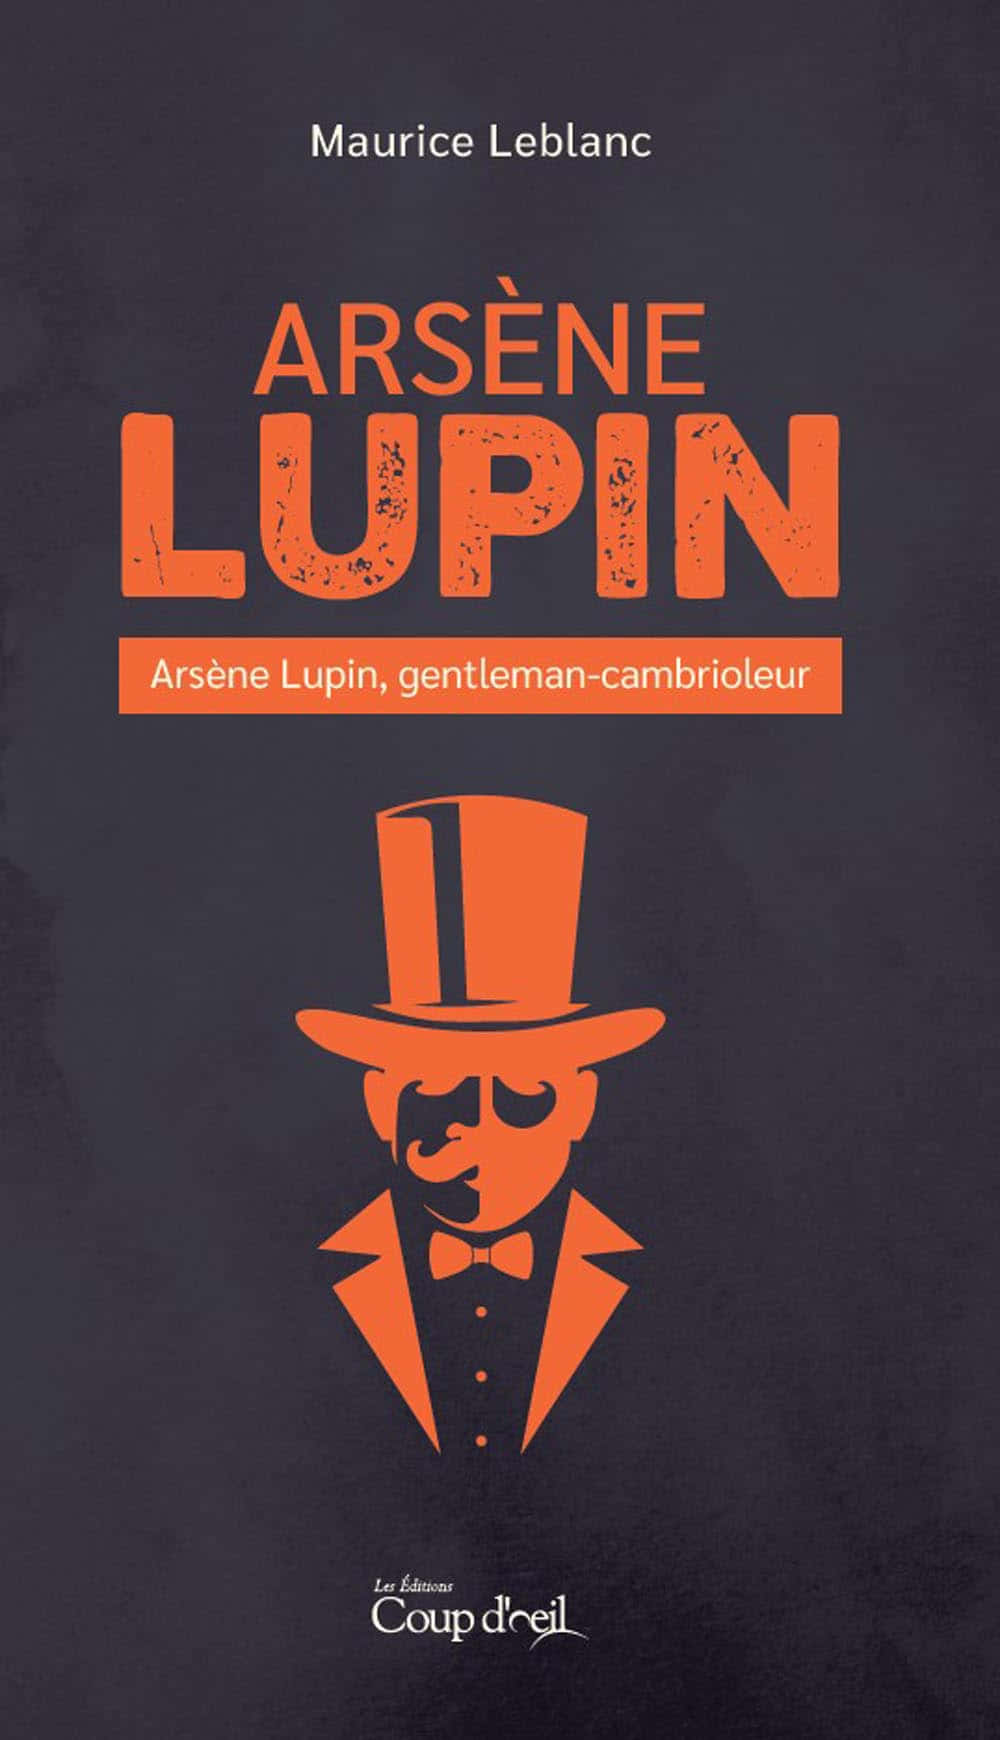 Download Arsenè Lupin - A Mysterious Gentleman Thief Wallpaper ...